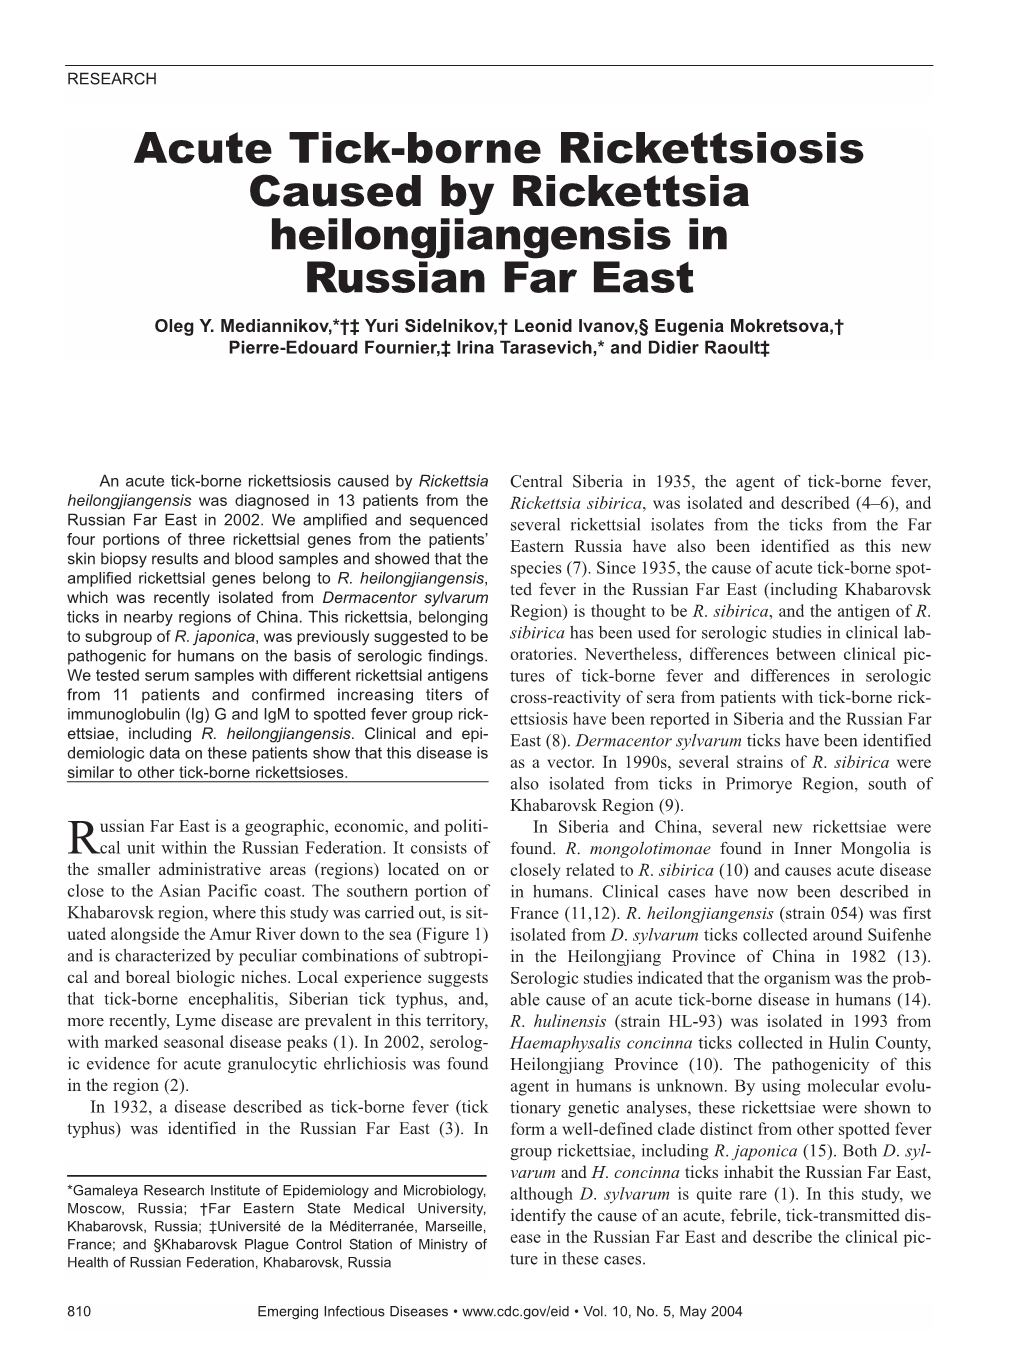 Acute Tick-Borne Rickettsiosis Caused by Rickettsia Heilongjiangensis in Russian Far East Oleg Y